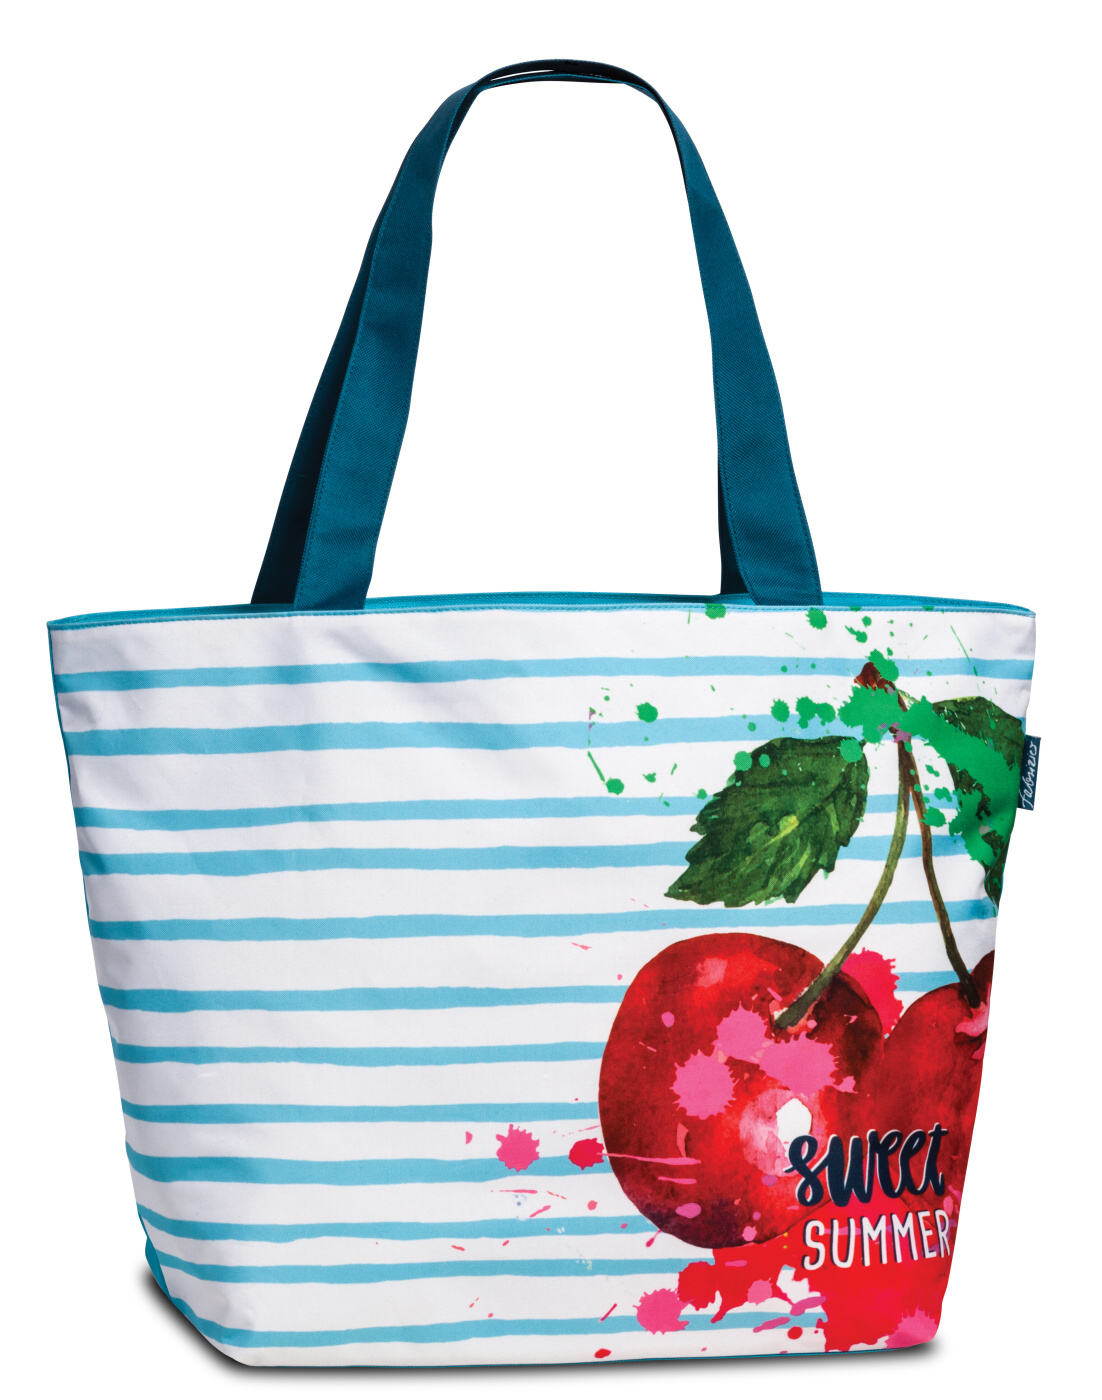 Plážová taška Fabrizio Summer Sweet 50407-4600 31 L modrá